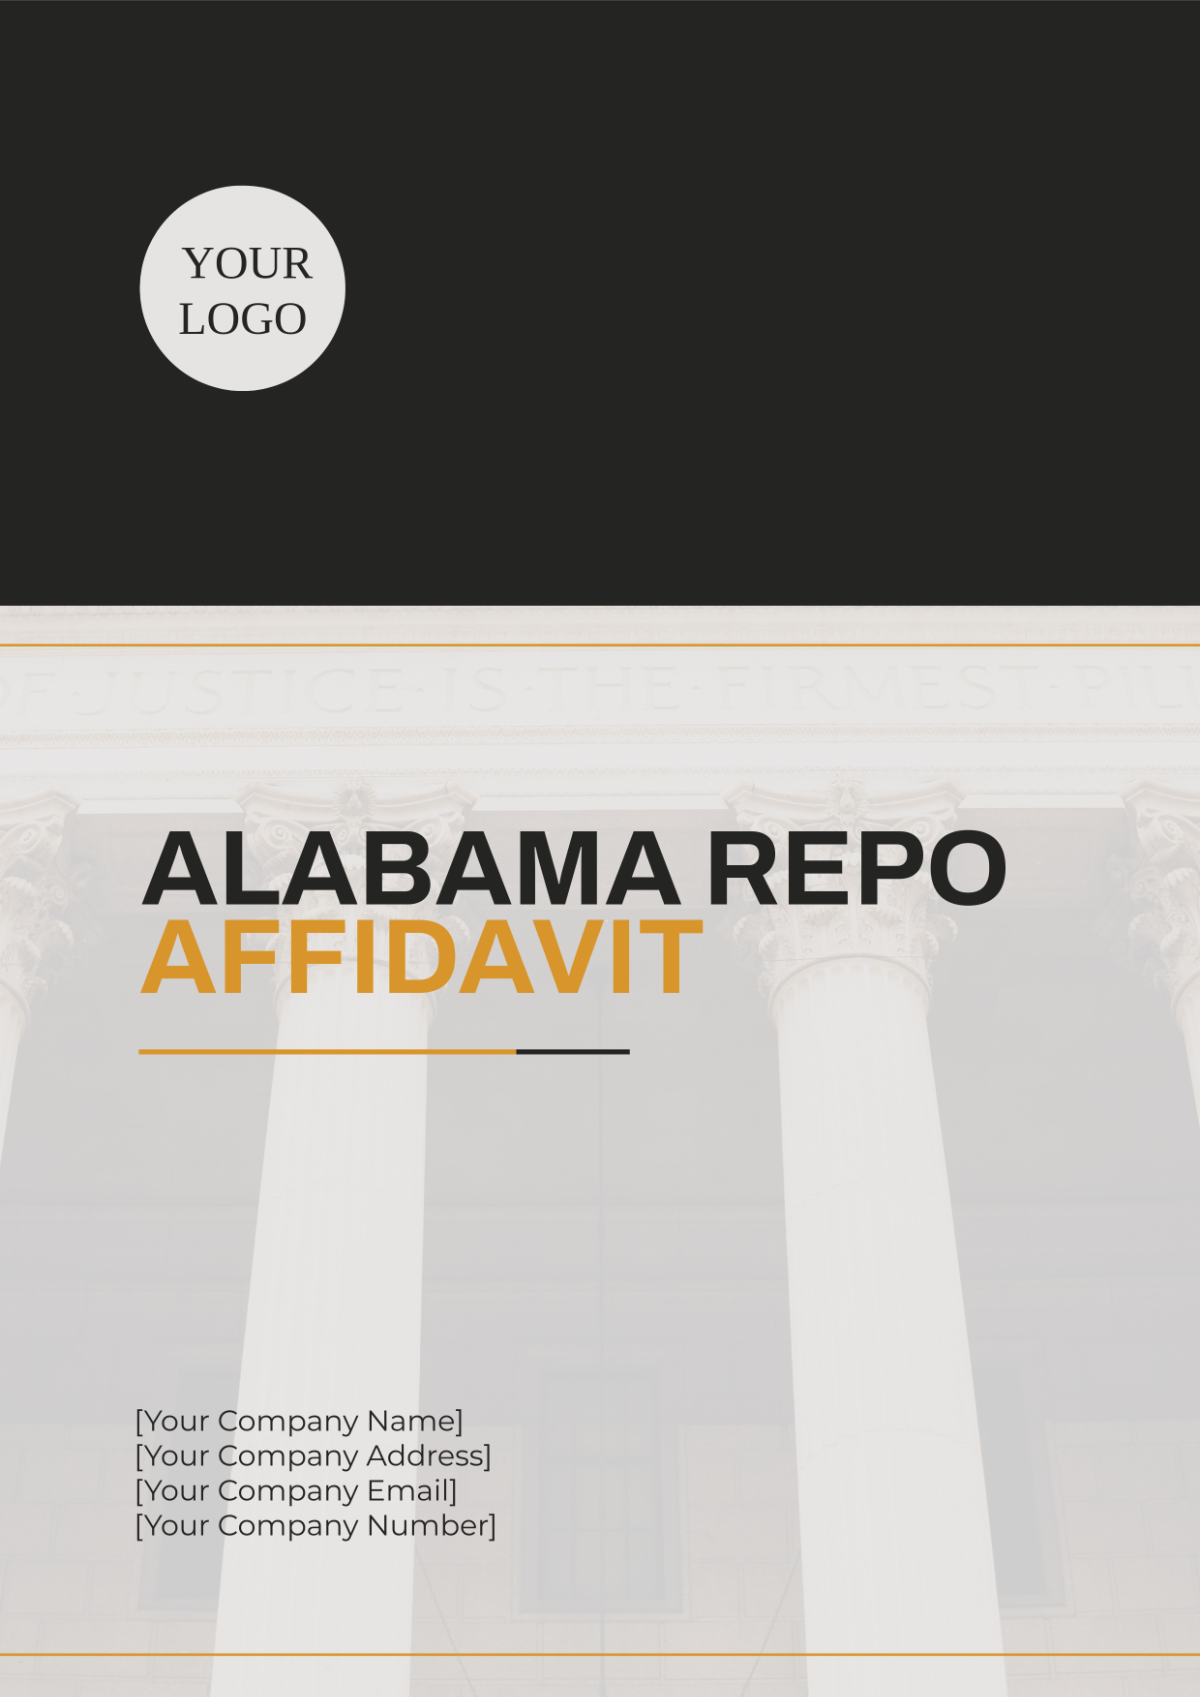 Alabama Repo Affidavit Cover Page